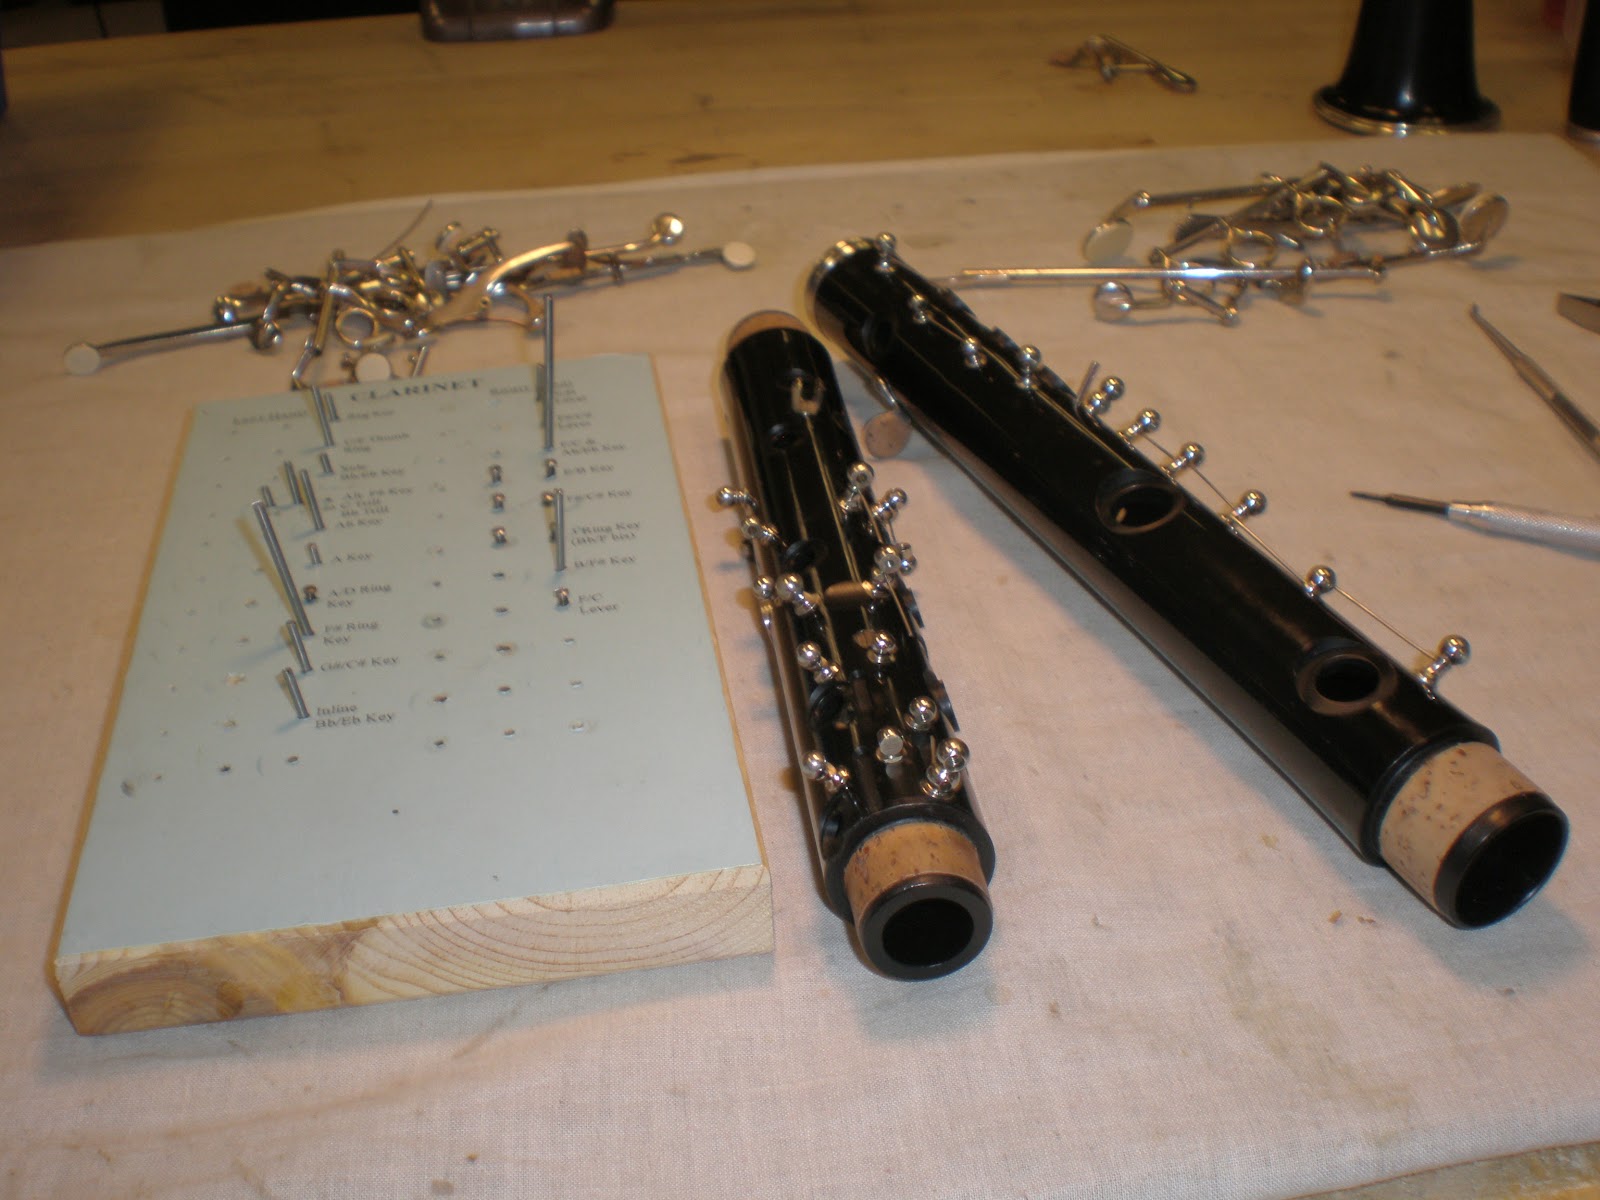 Band Instrument Repair School: October 2010